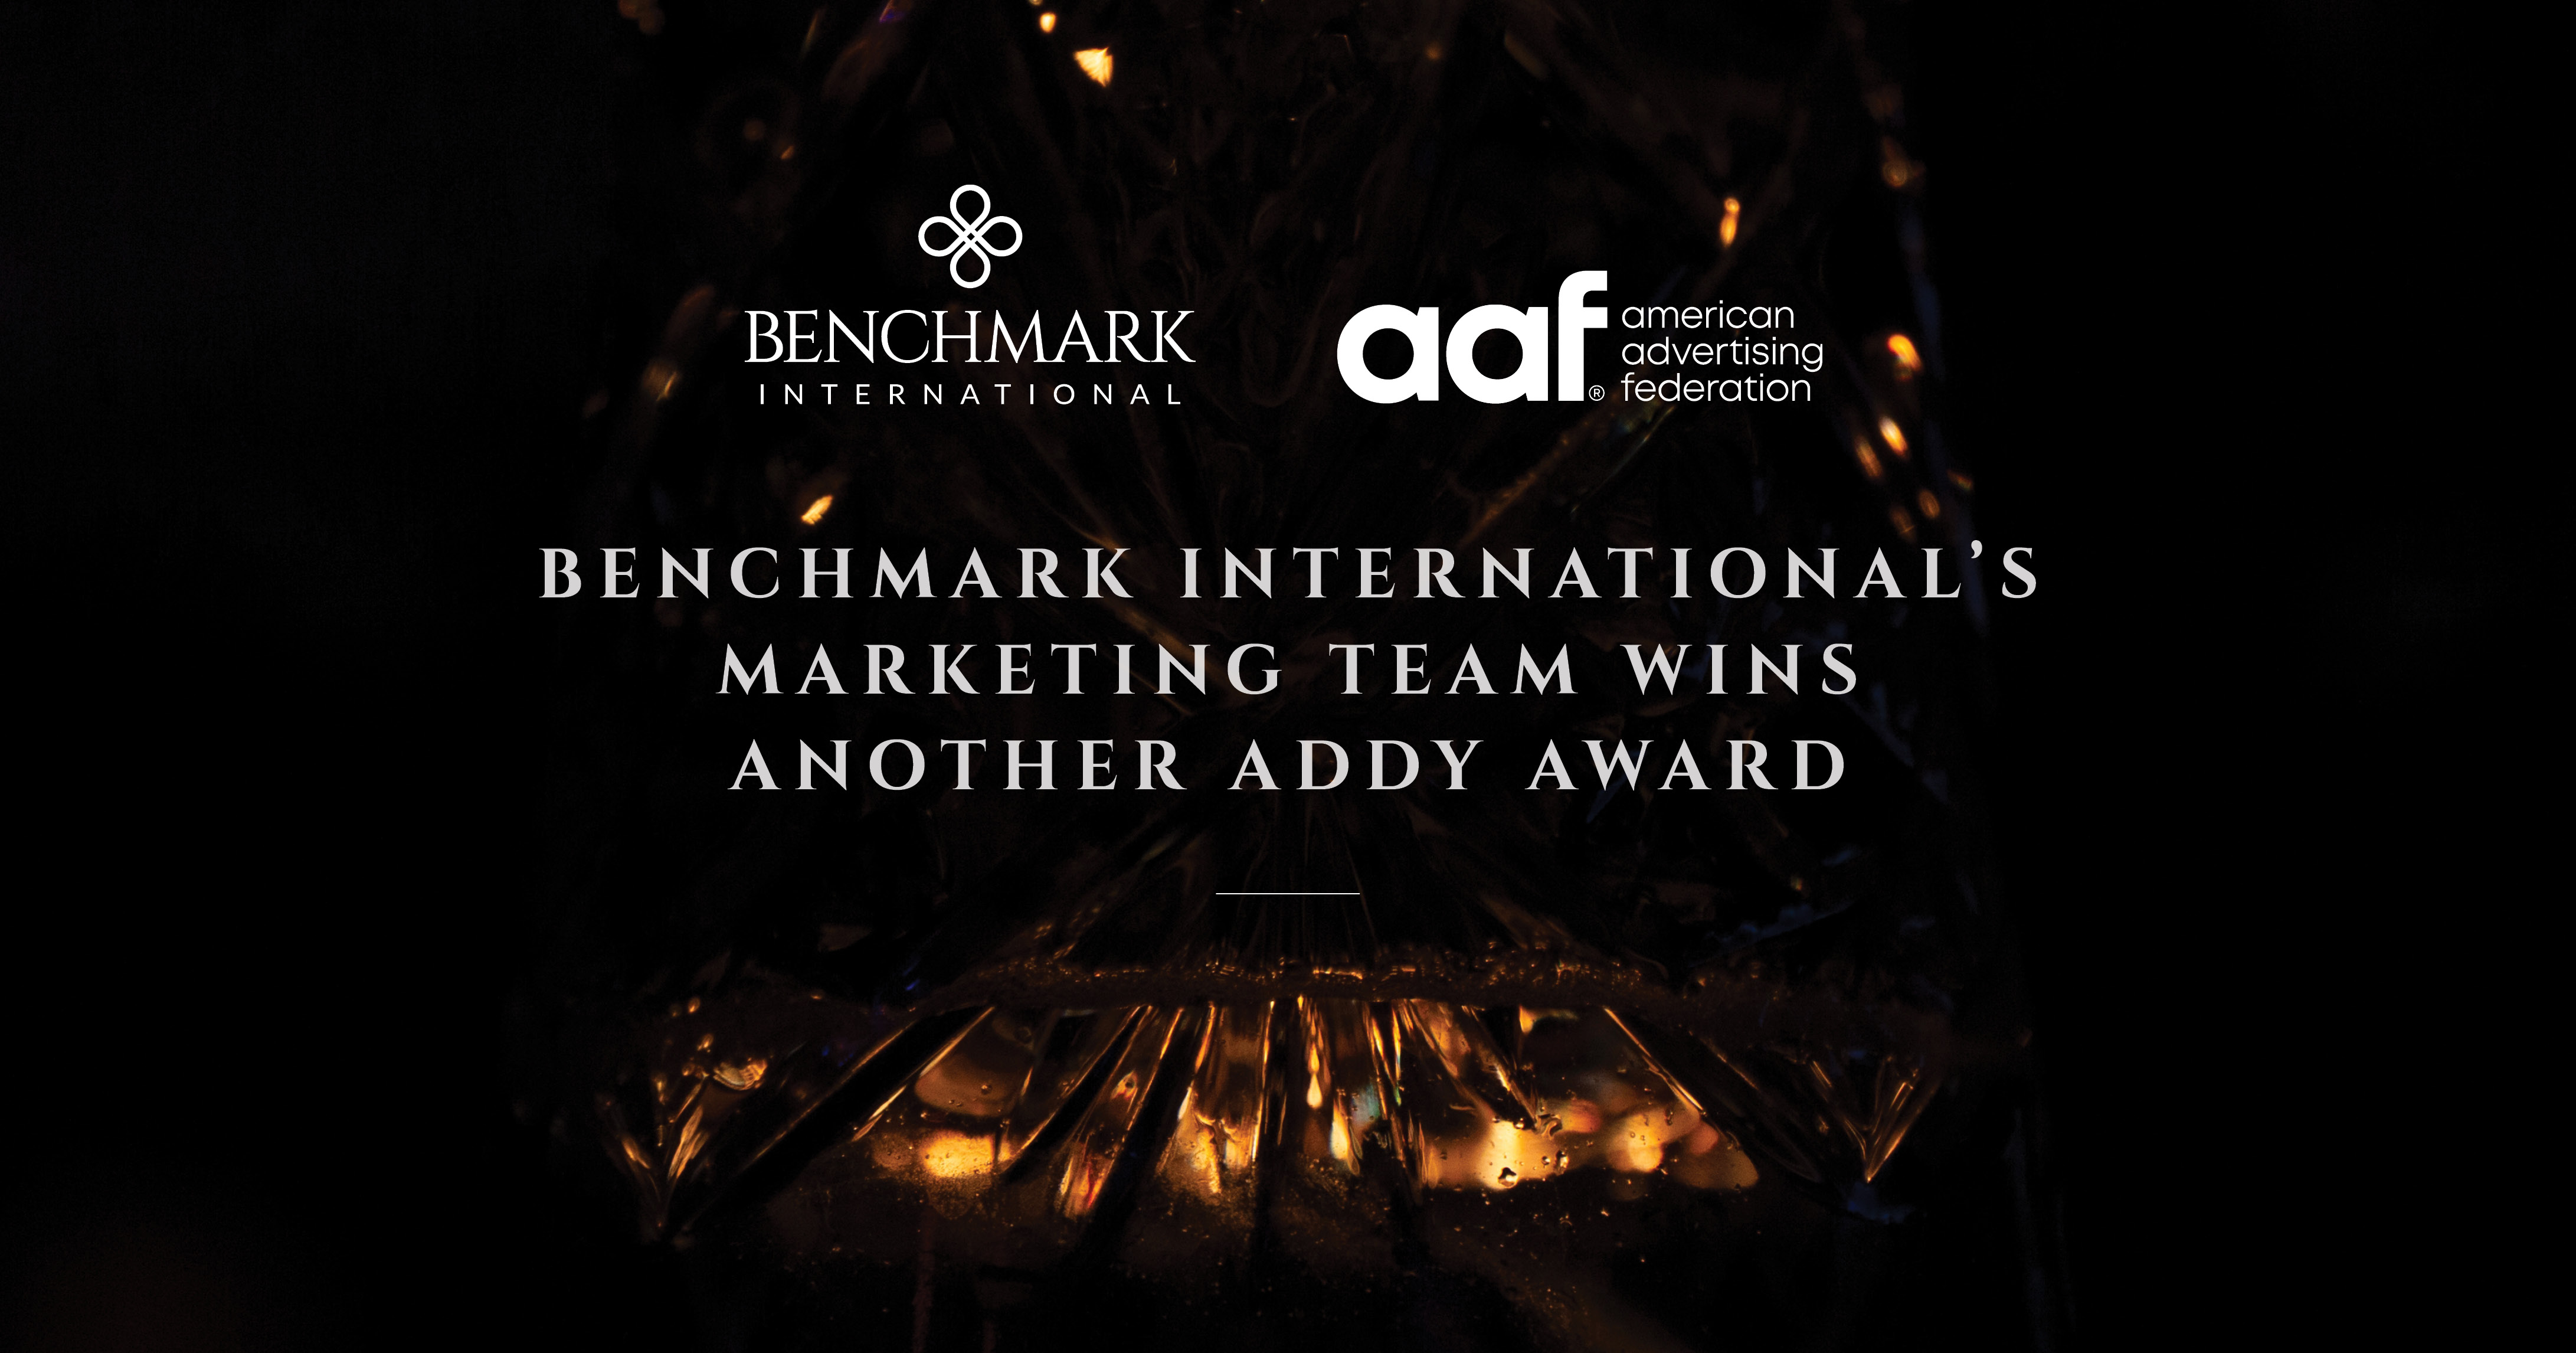 Benchmark International’s Marketing Team Wins Another Addy Award